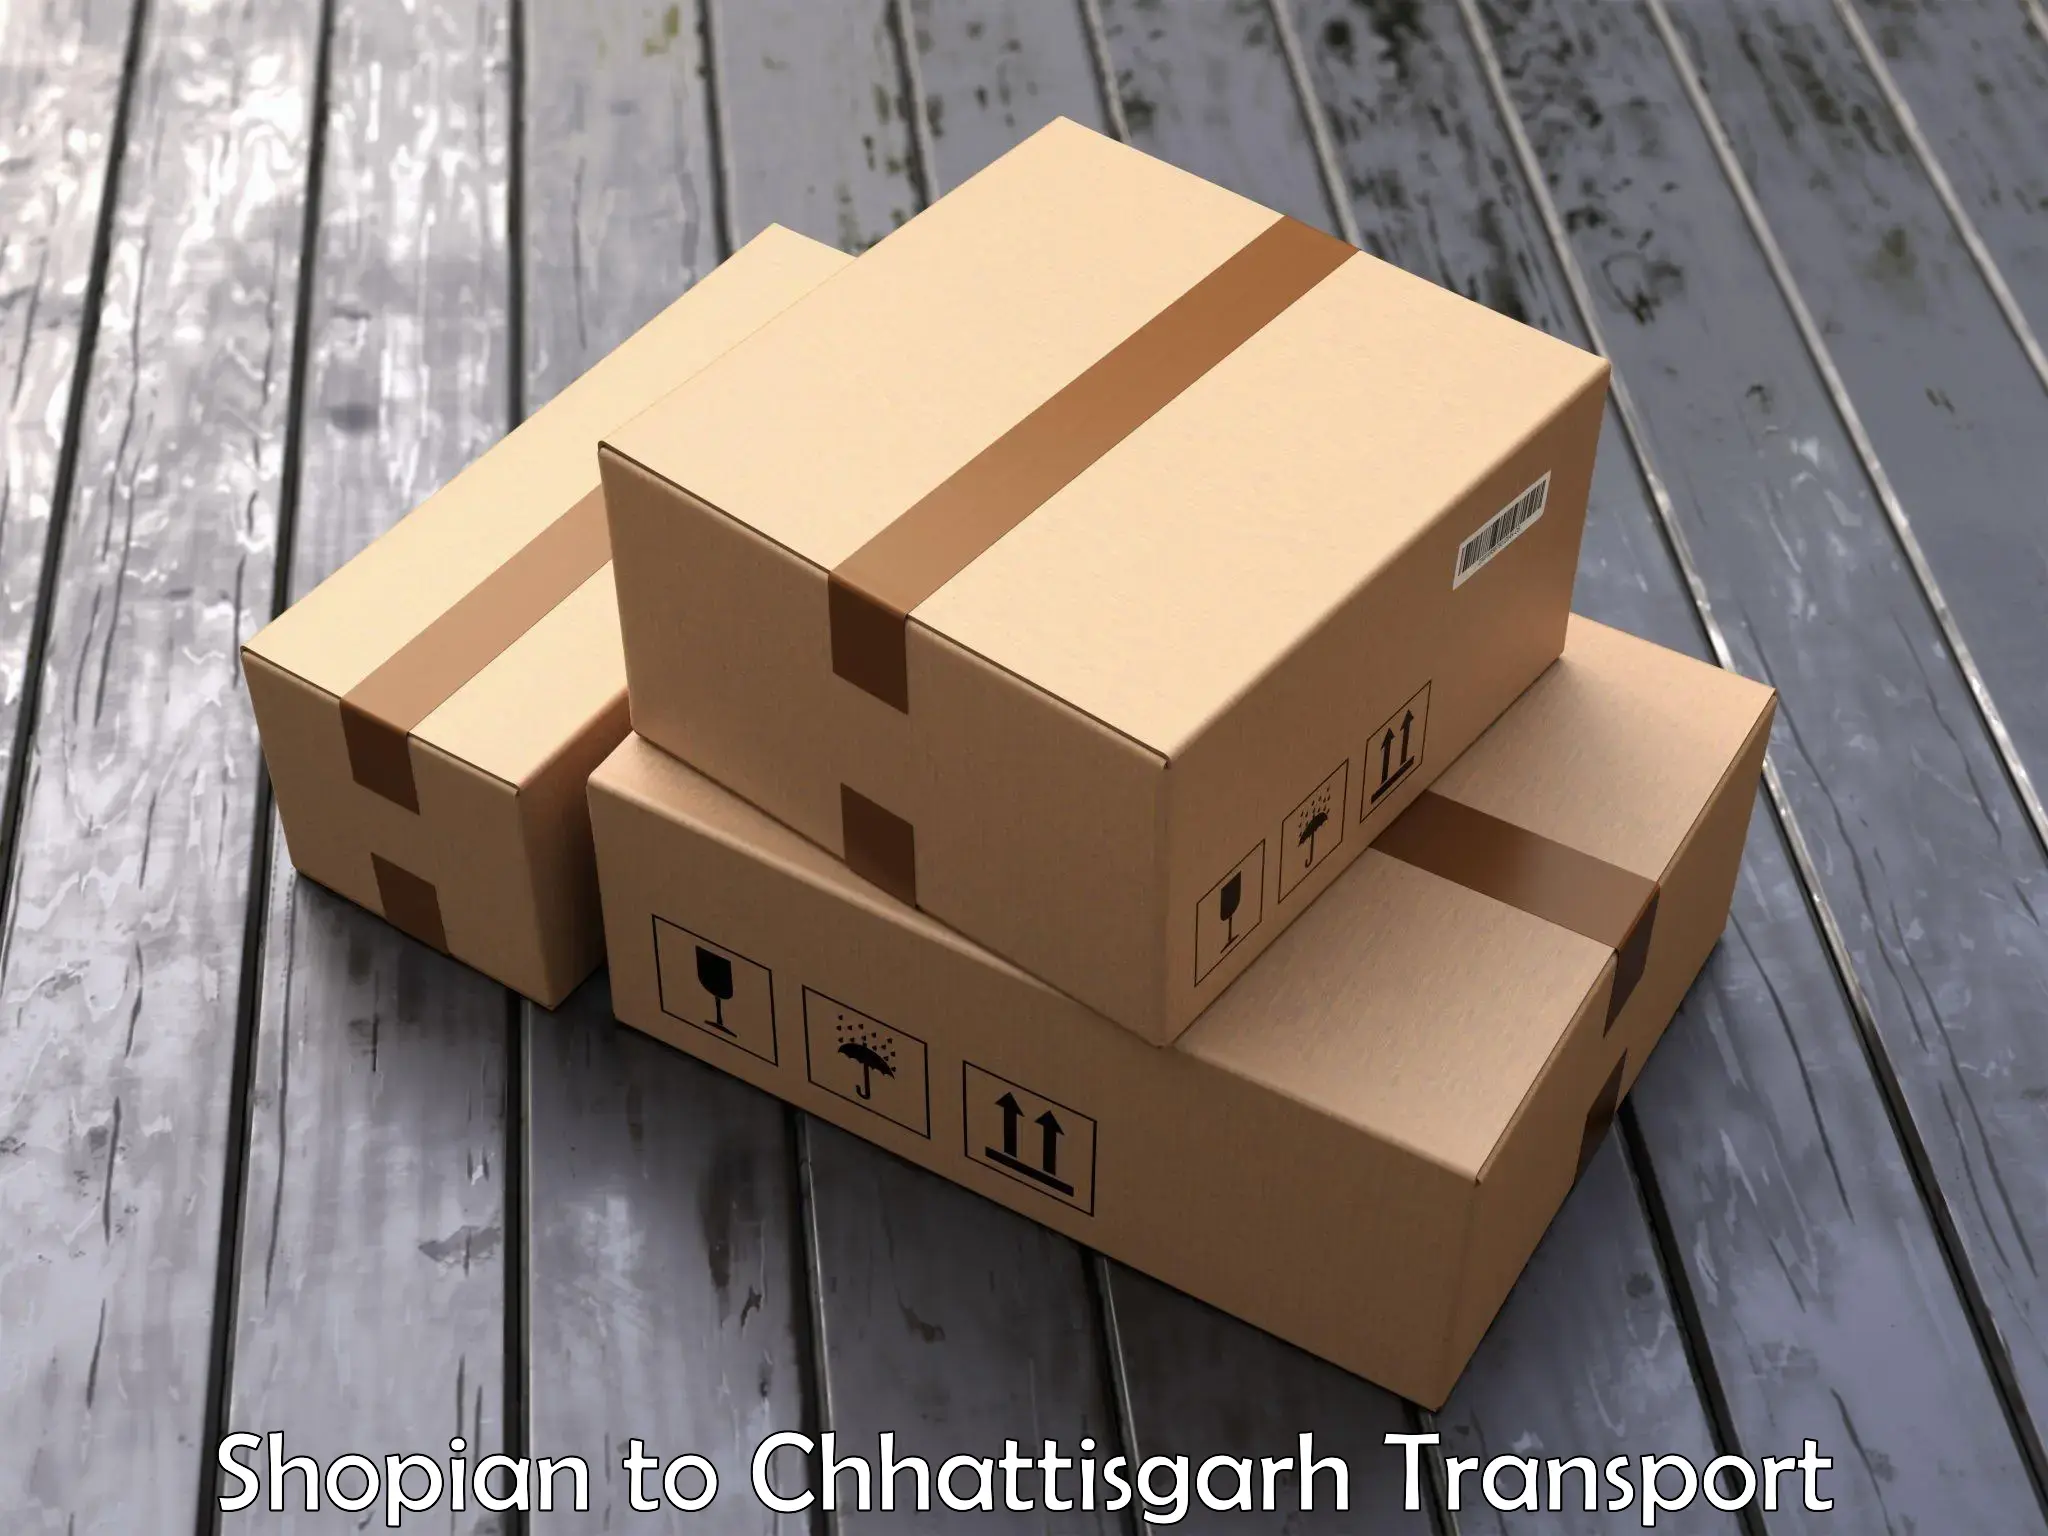 Part load transport service in India Shopian to Bargidih